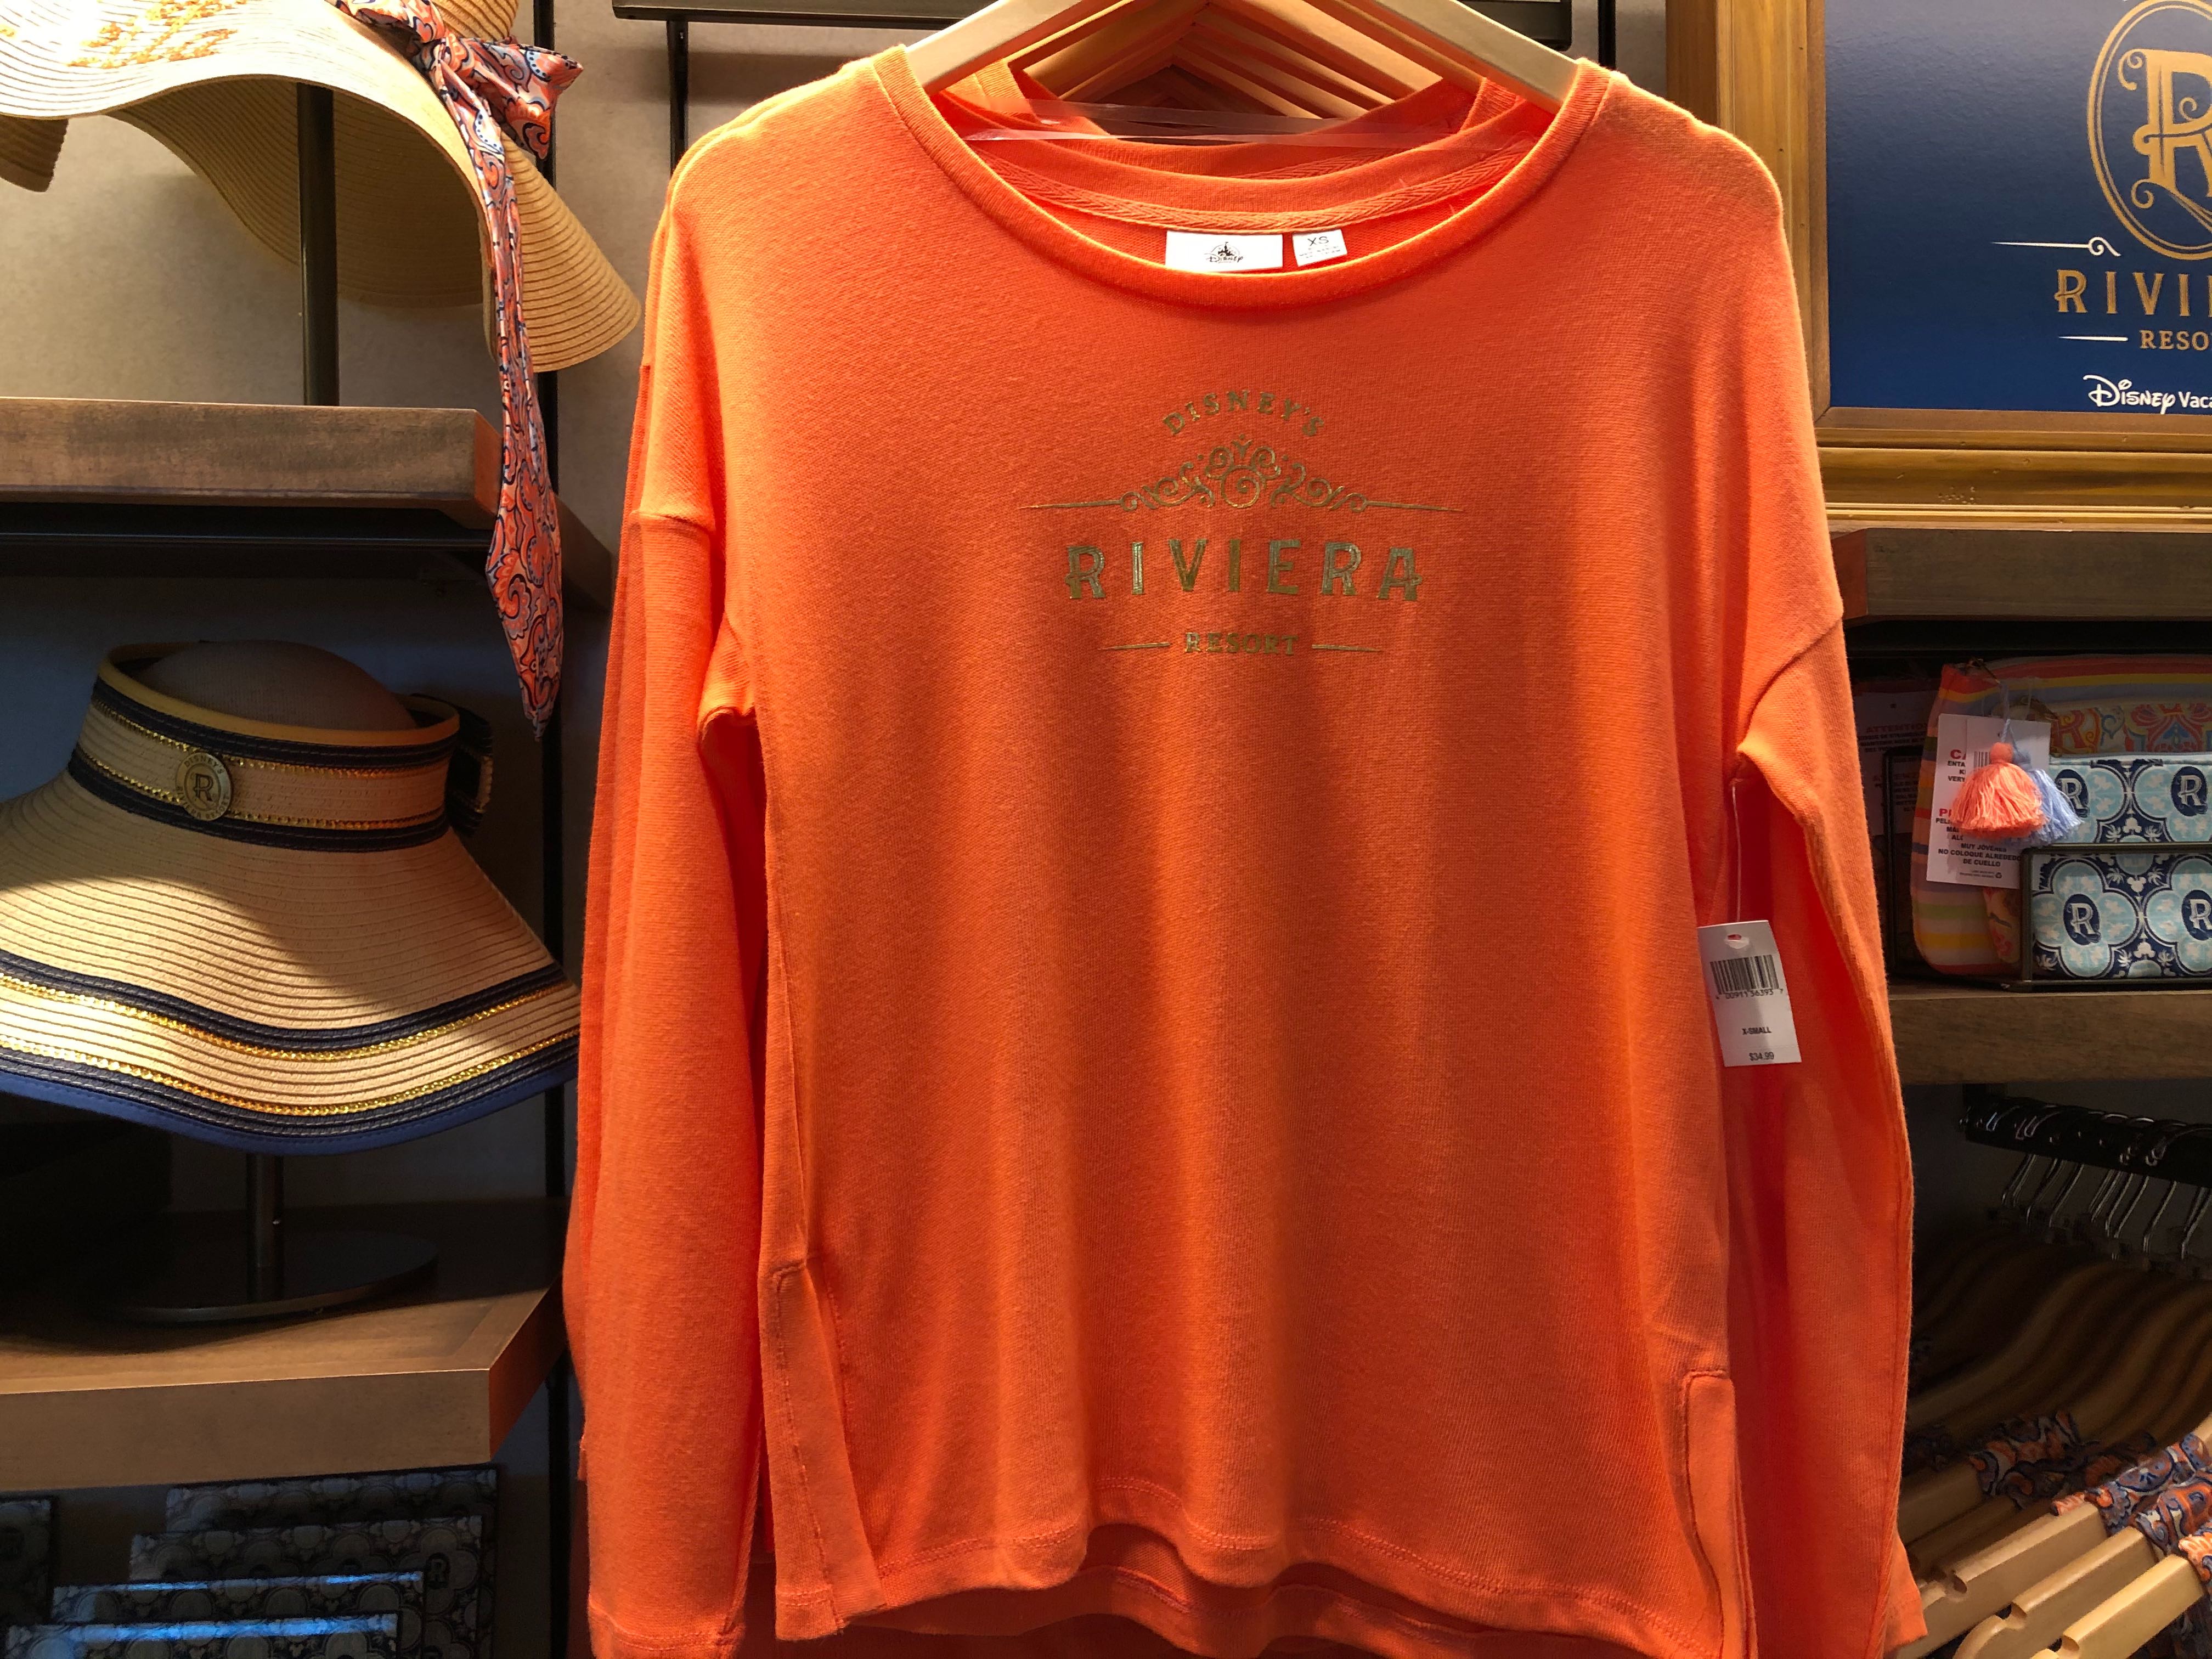 Riviera Resort Orange Long Sleeve Shirt - $34.99